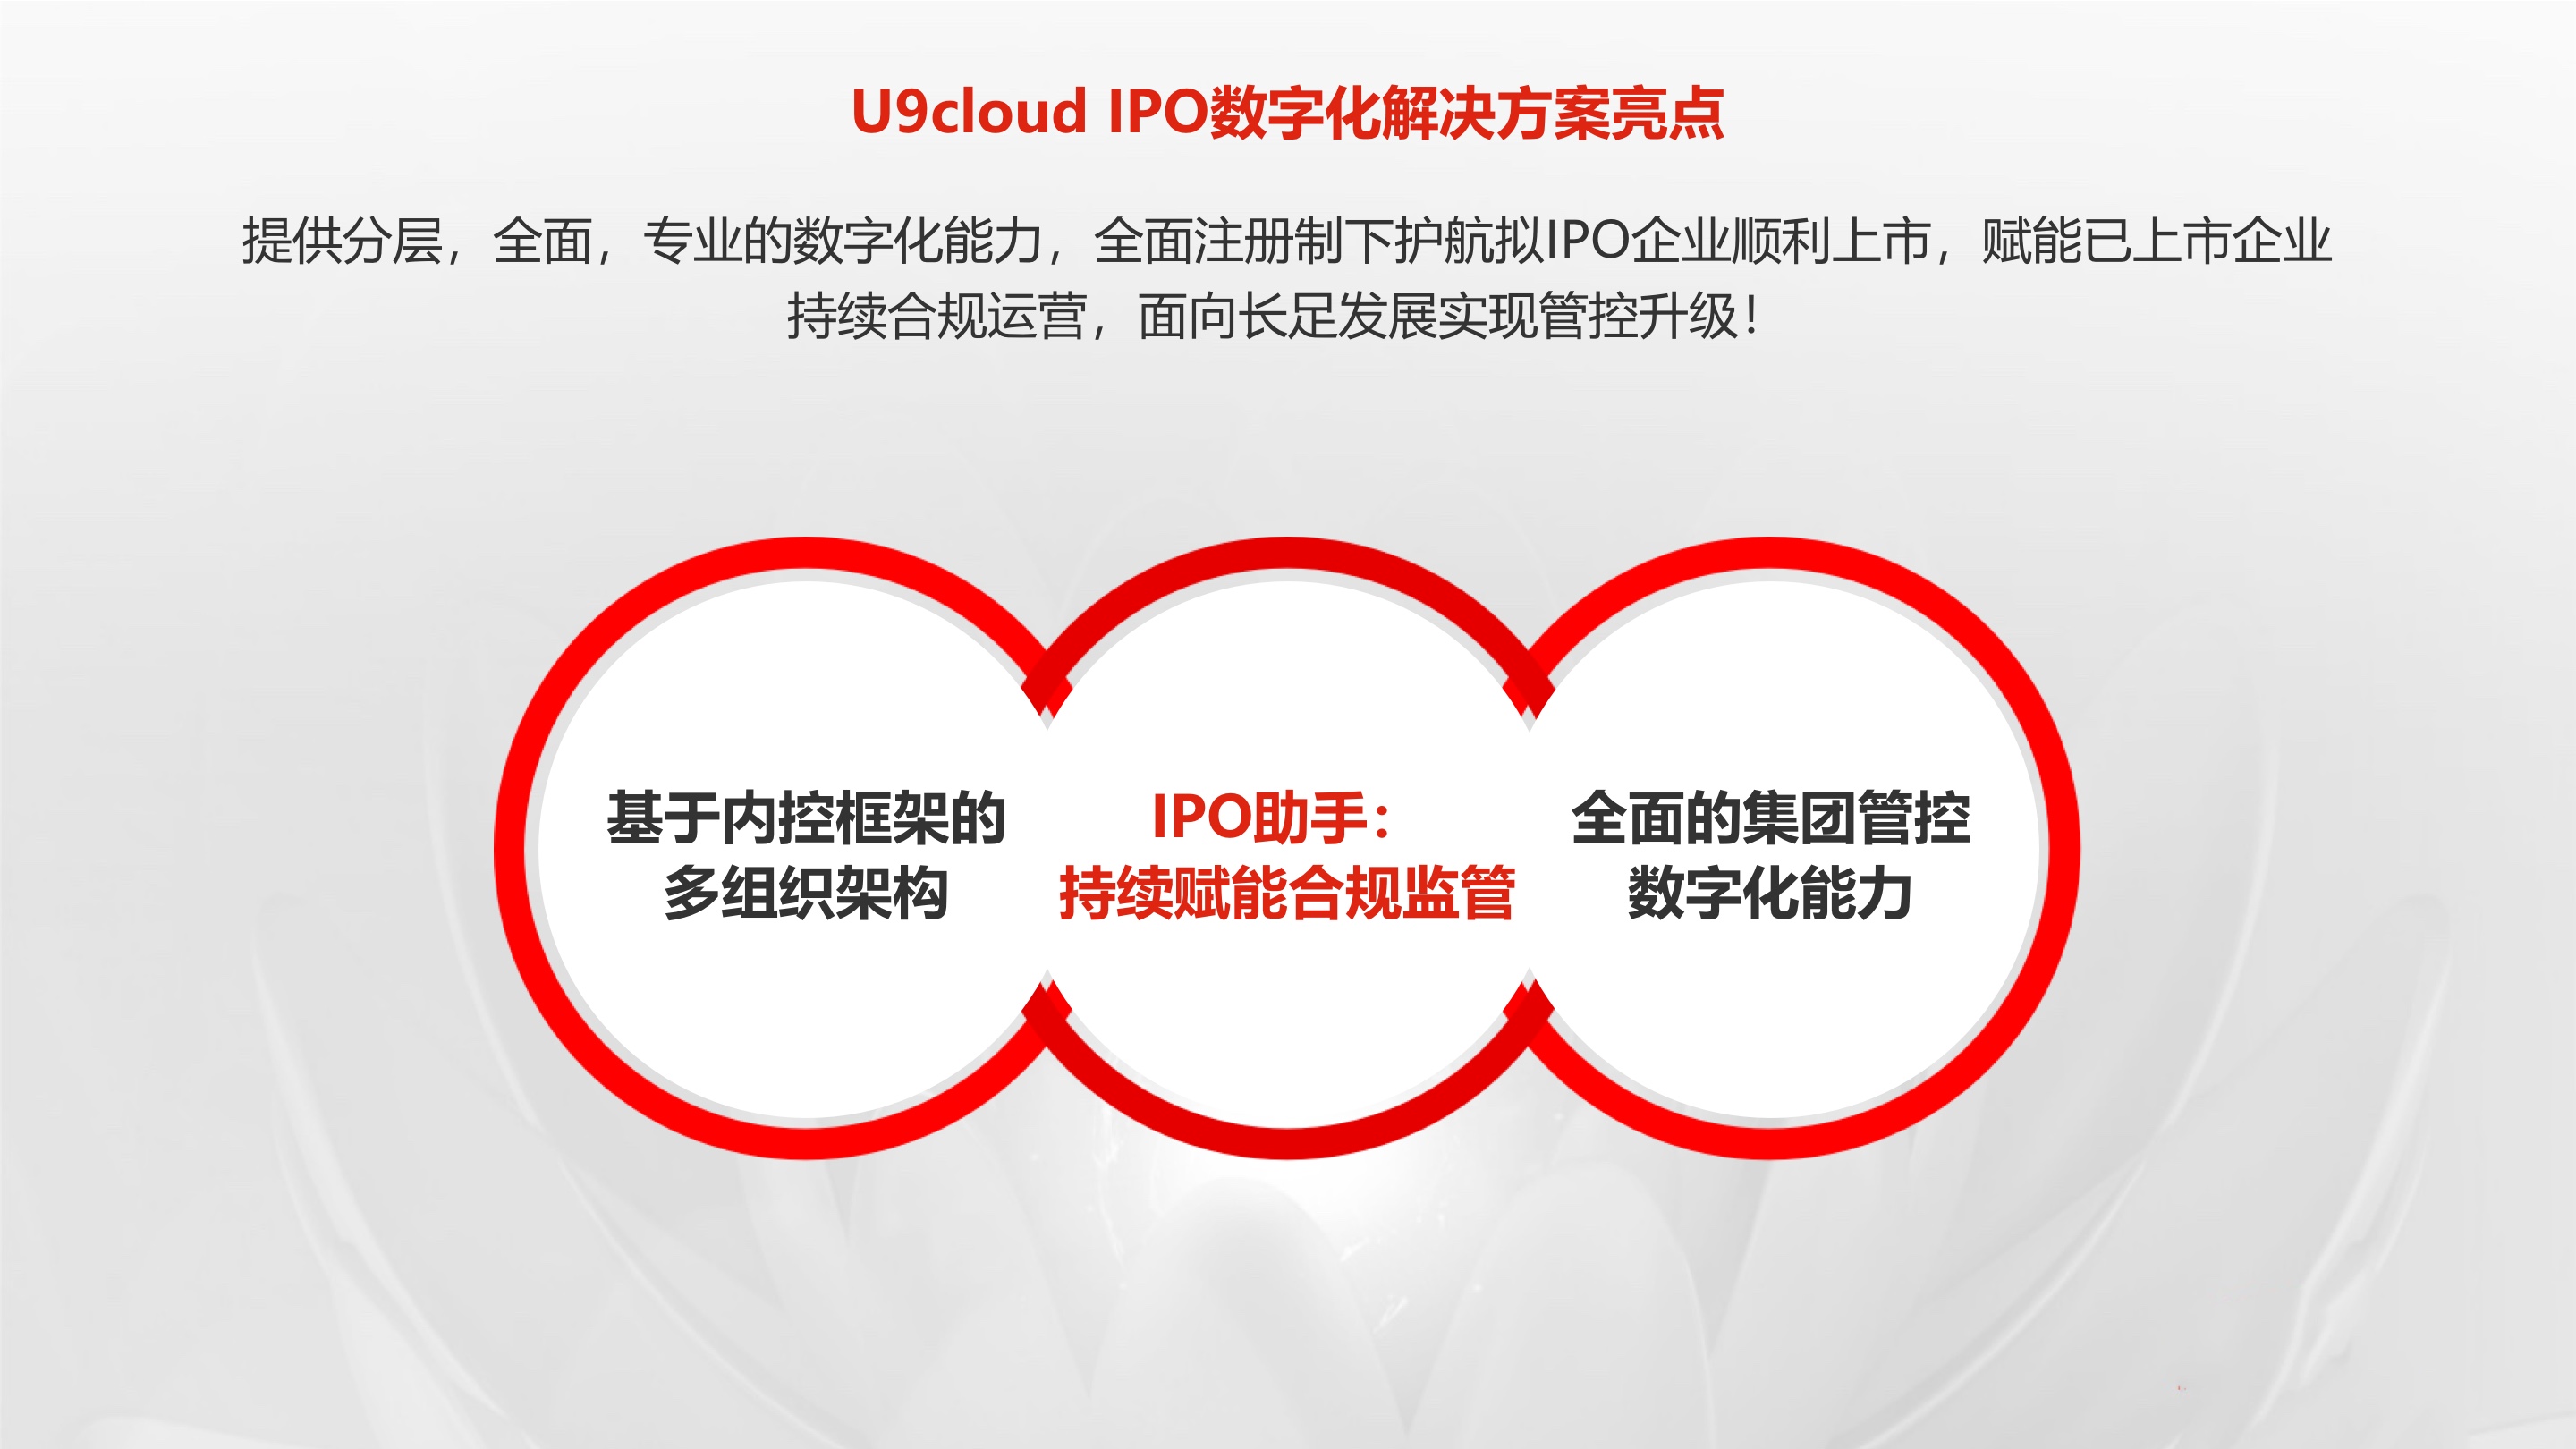 U9cloud IPO数字化解决方案亮点